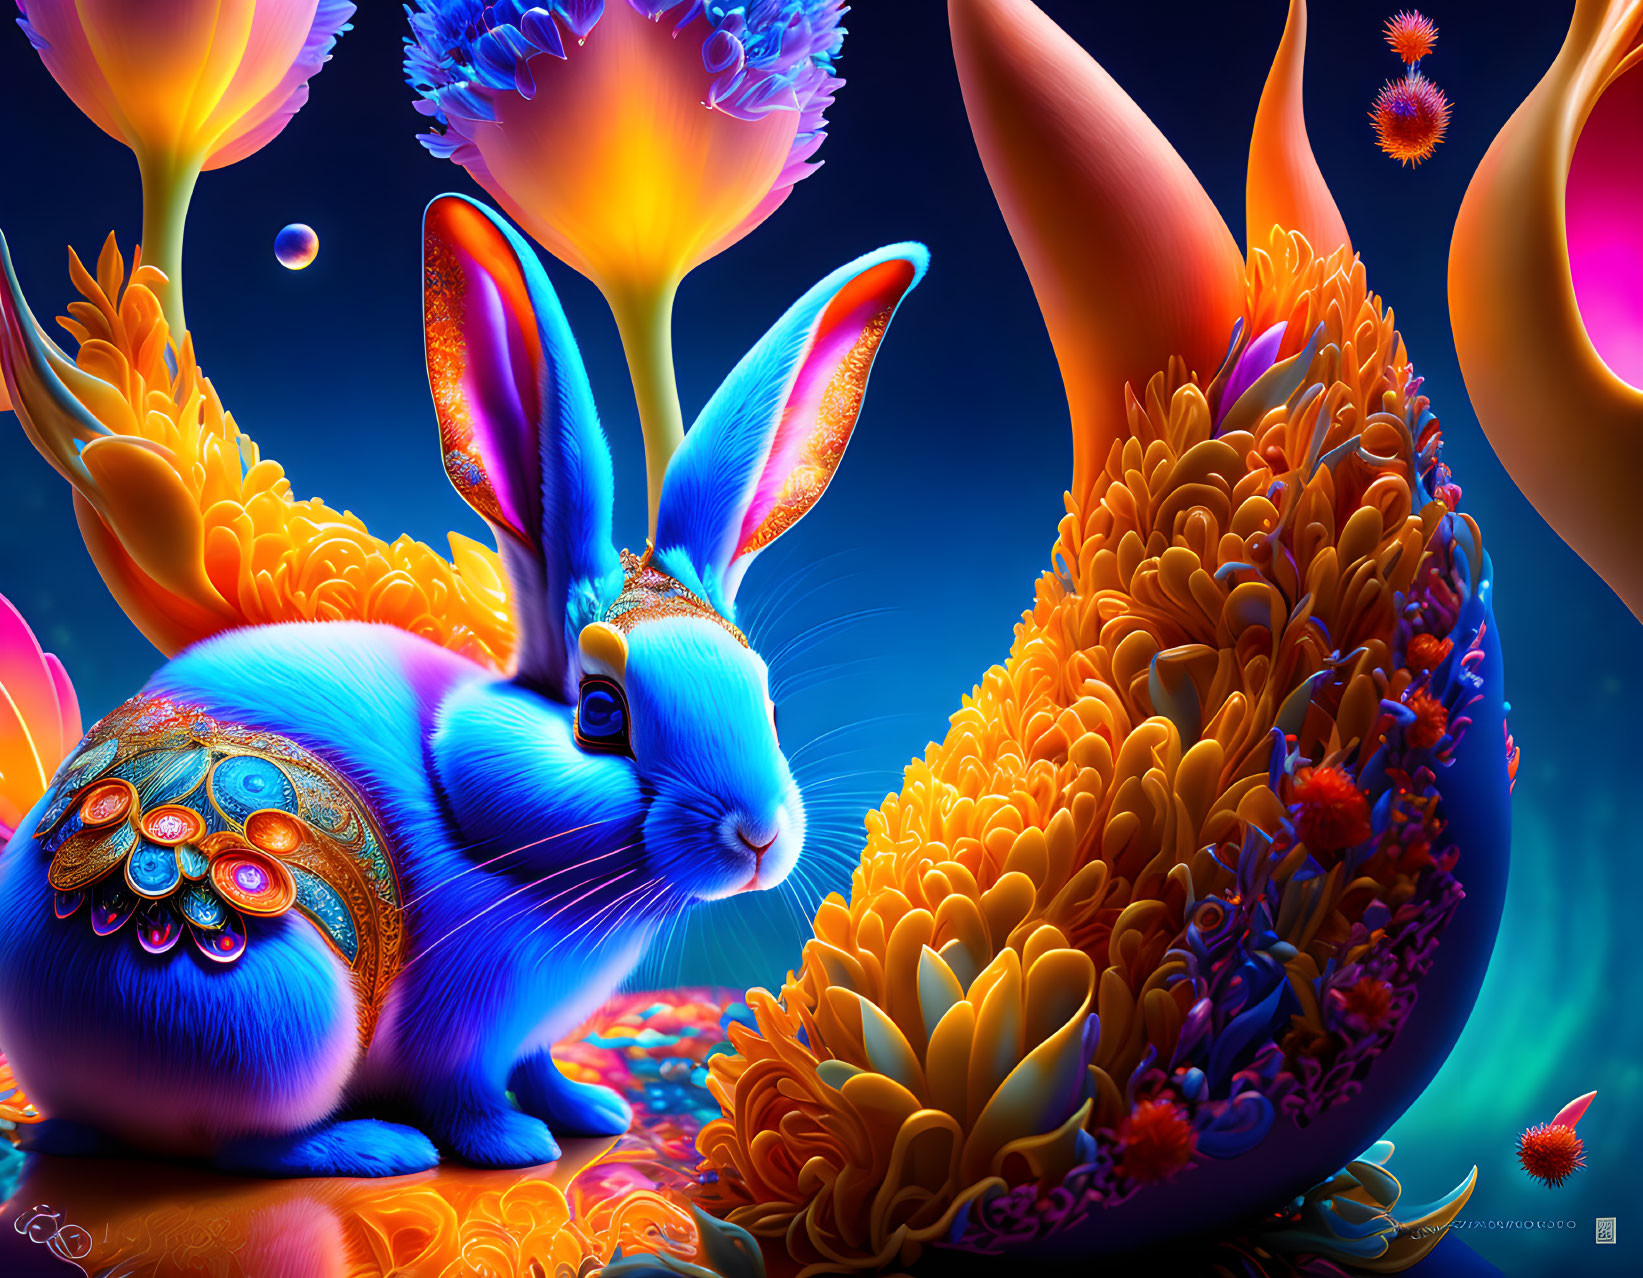 Colorful Digital Art: Luminous Blue Rabbit Amid Abstract Flora